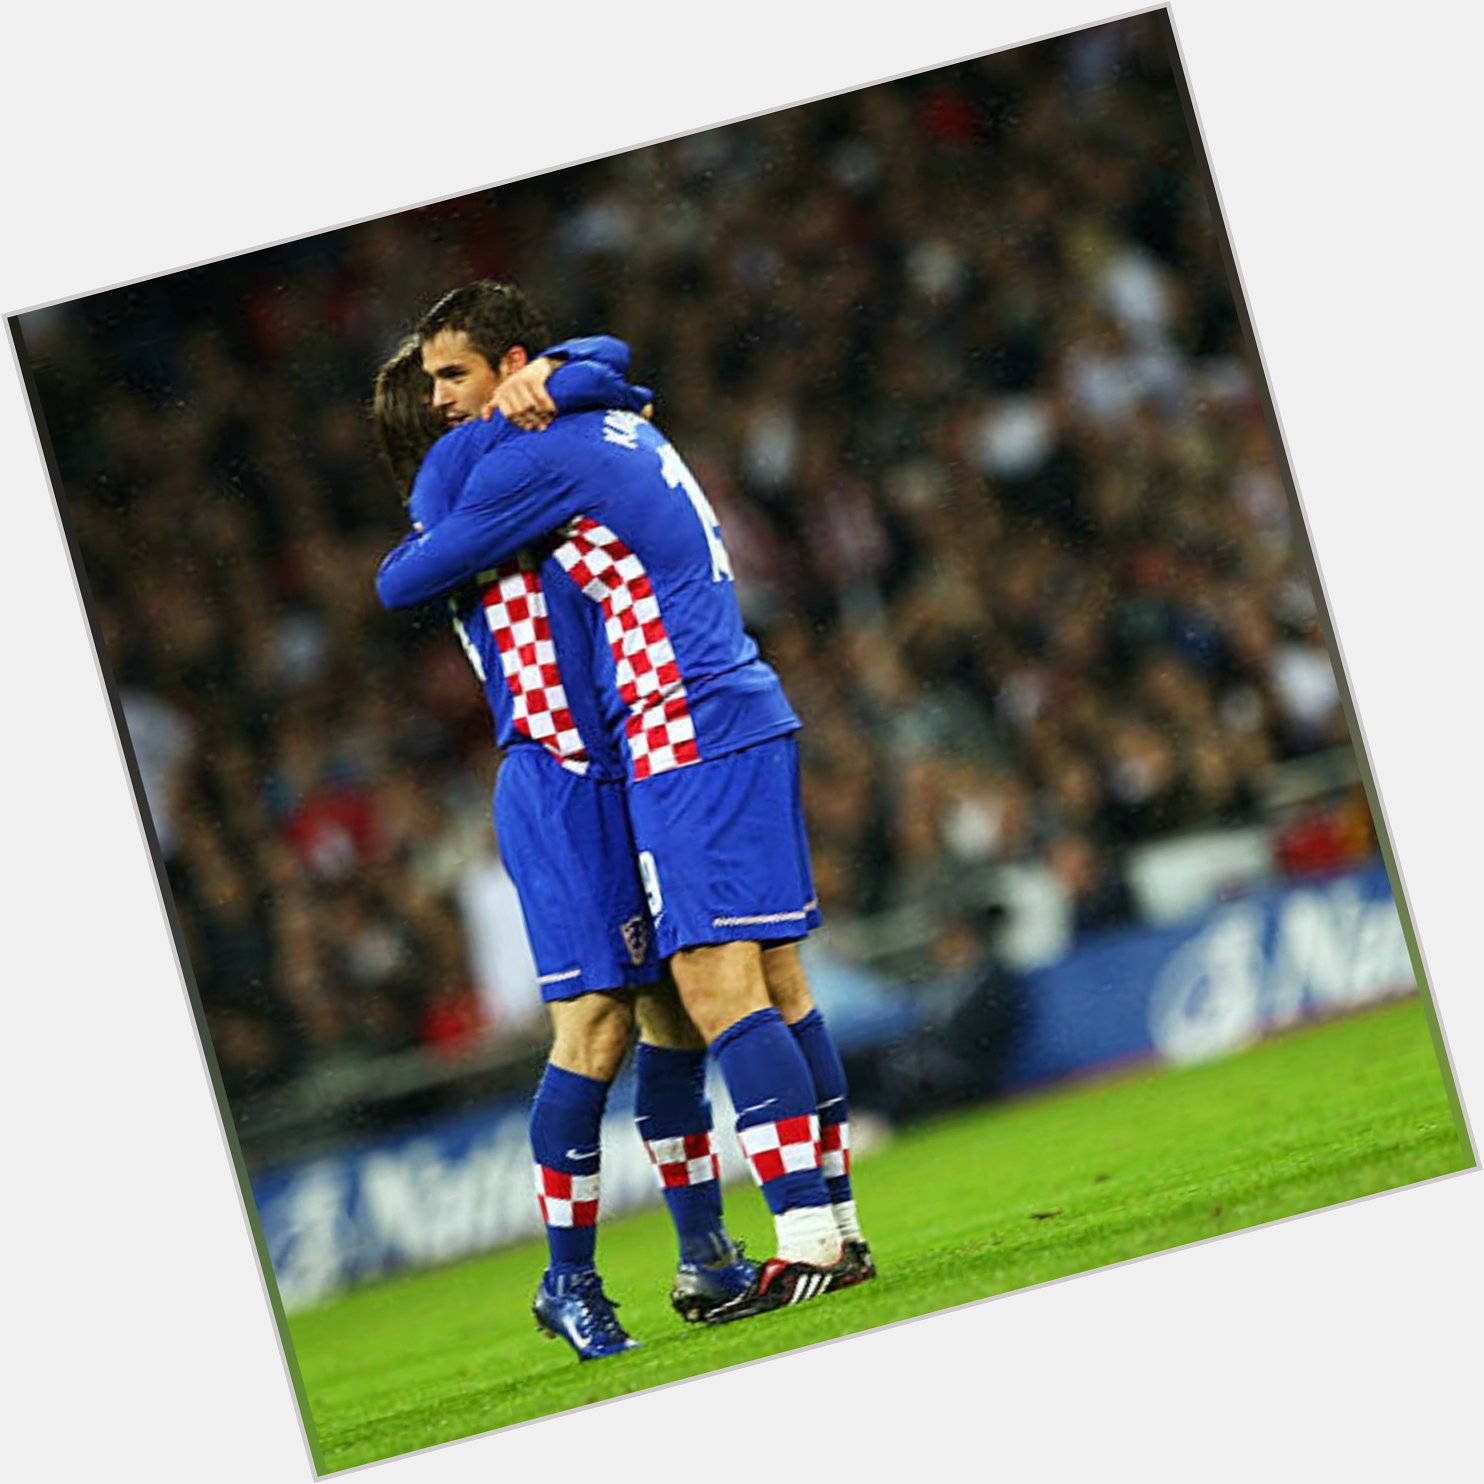                                     Modric and Kranjcar.  Happy Birthday Niko Kranjcar.  Sretan ro endan 